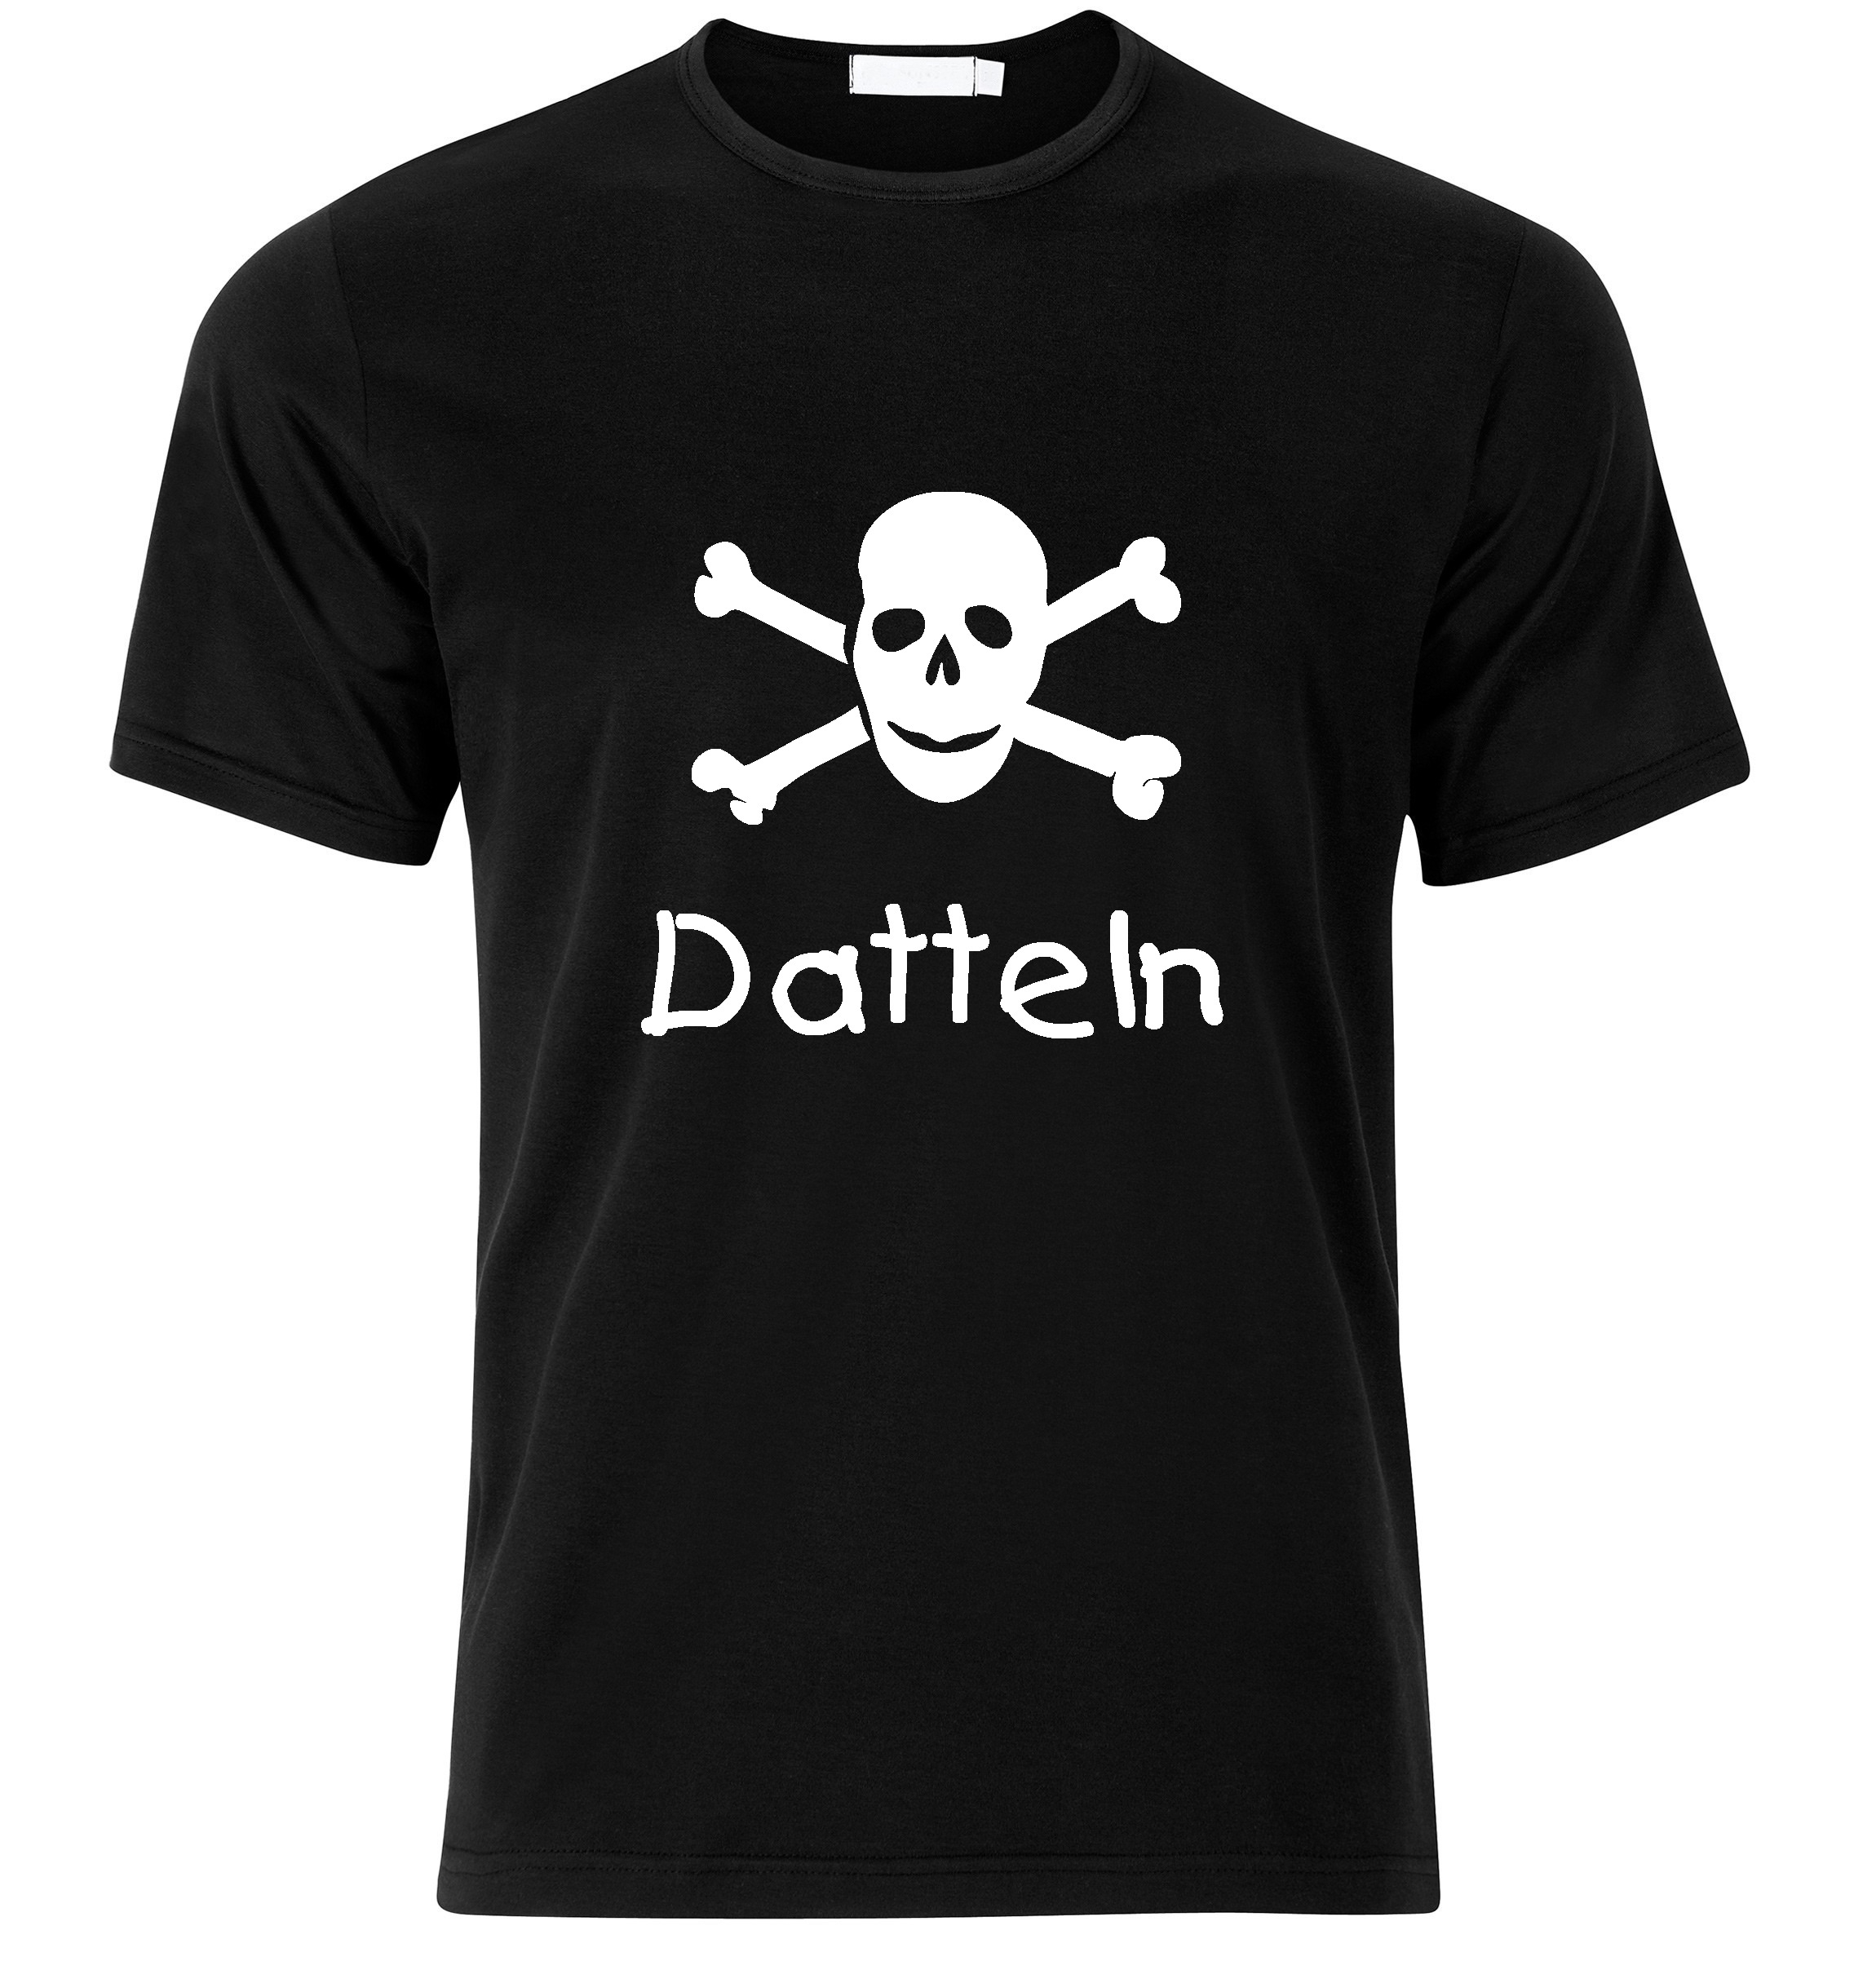 T-Shirt Datteln Jolly Roger, Totenkopf